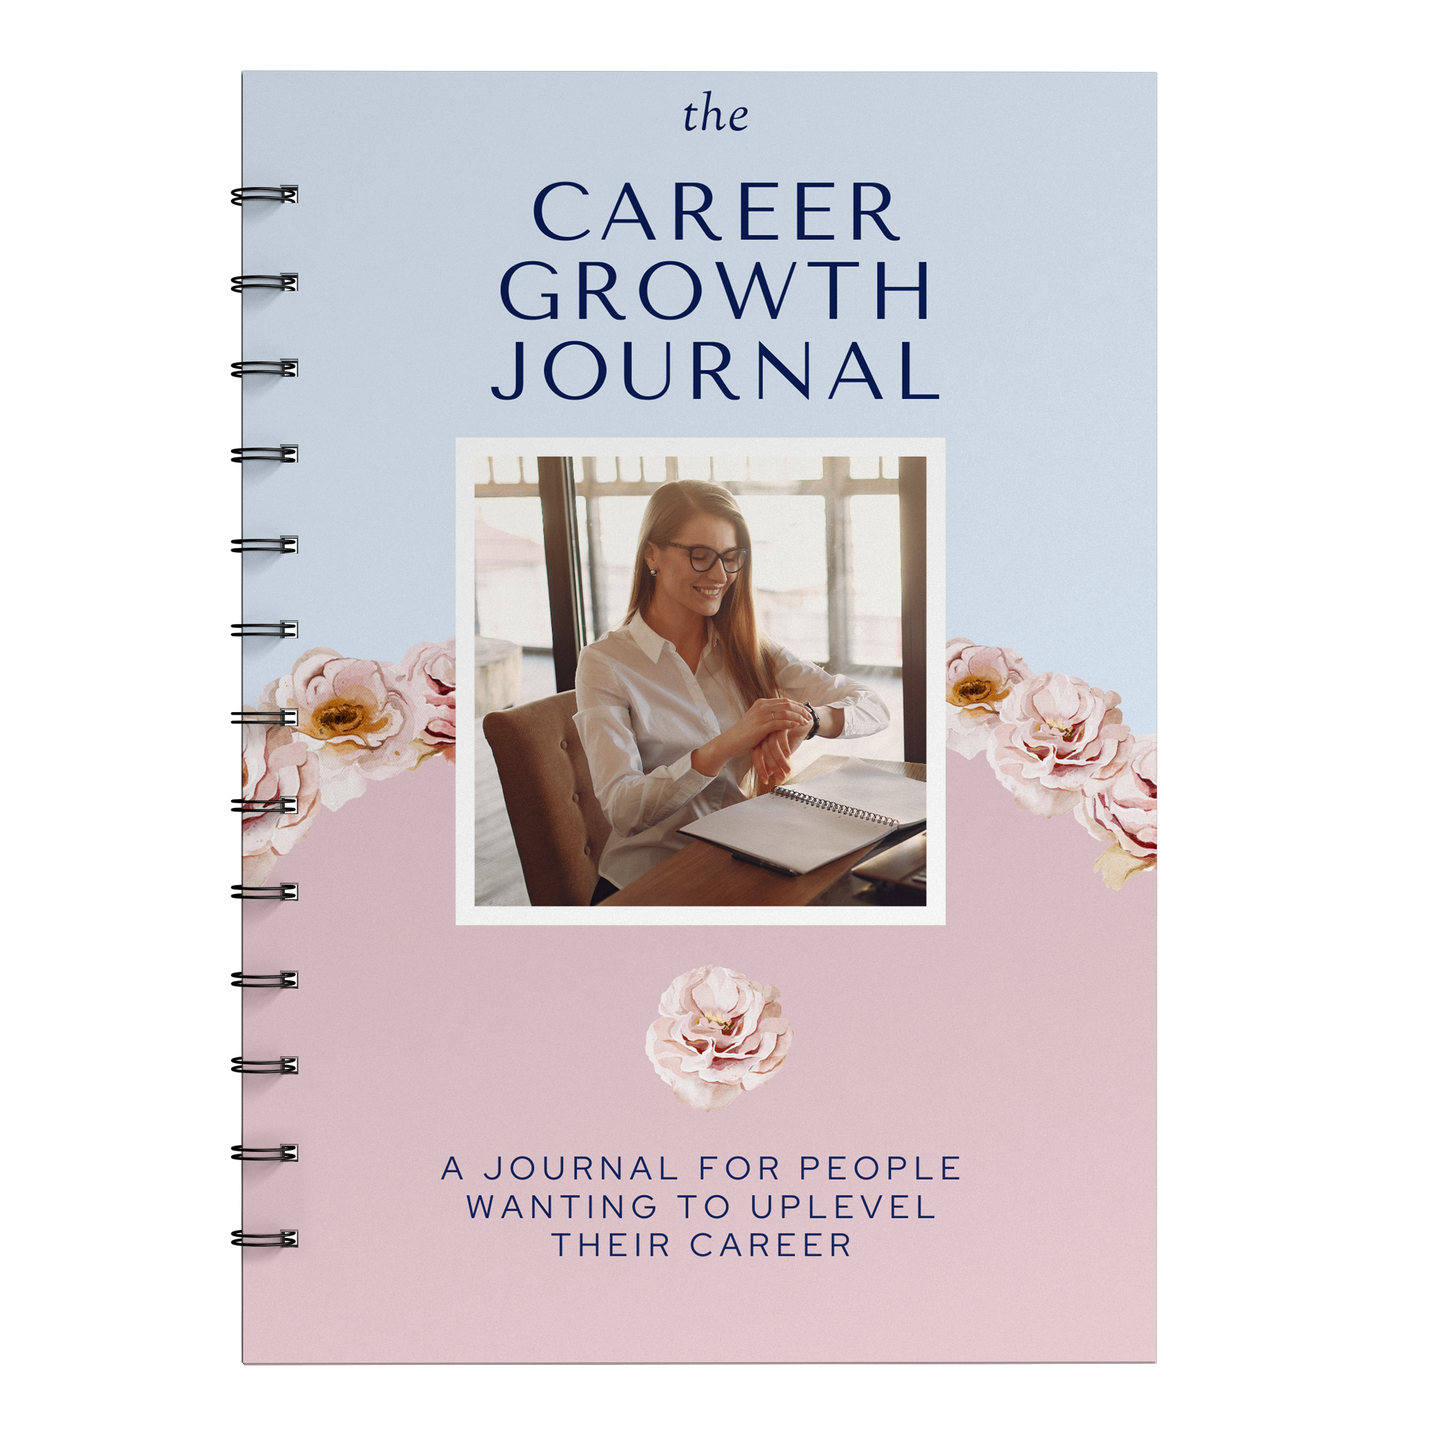 The Career Growth Journal